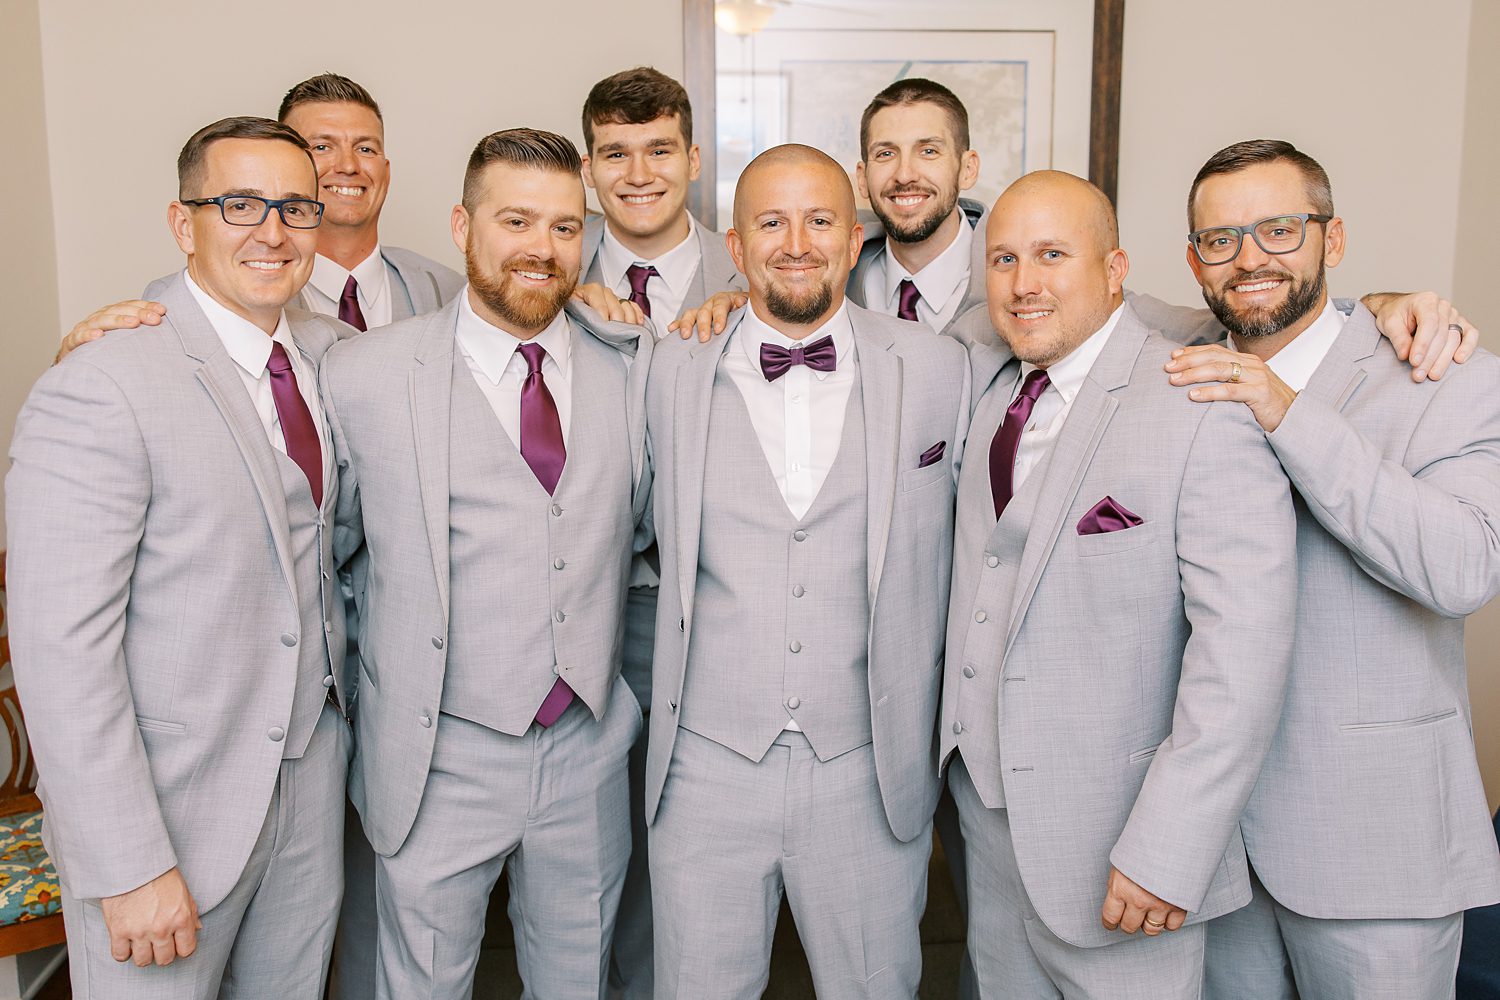 groom poses with groomsmen in grey suits with plum ties